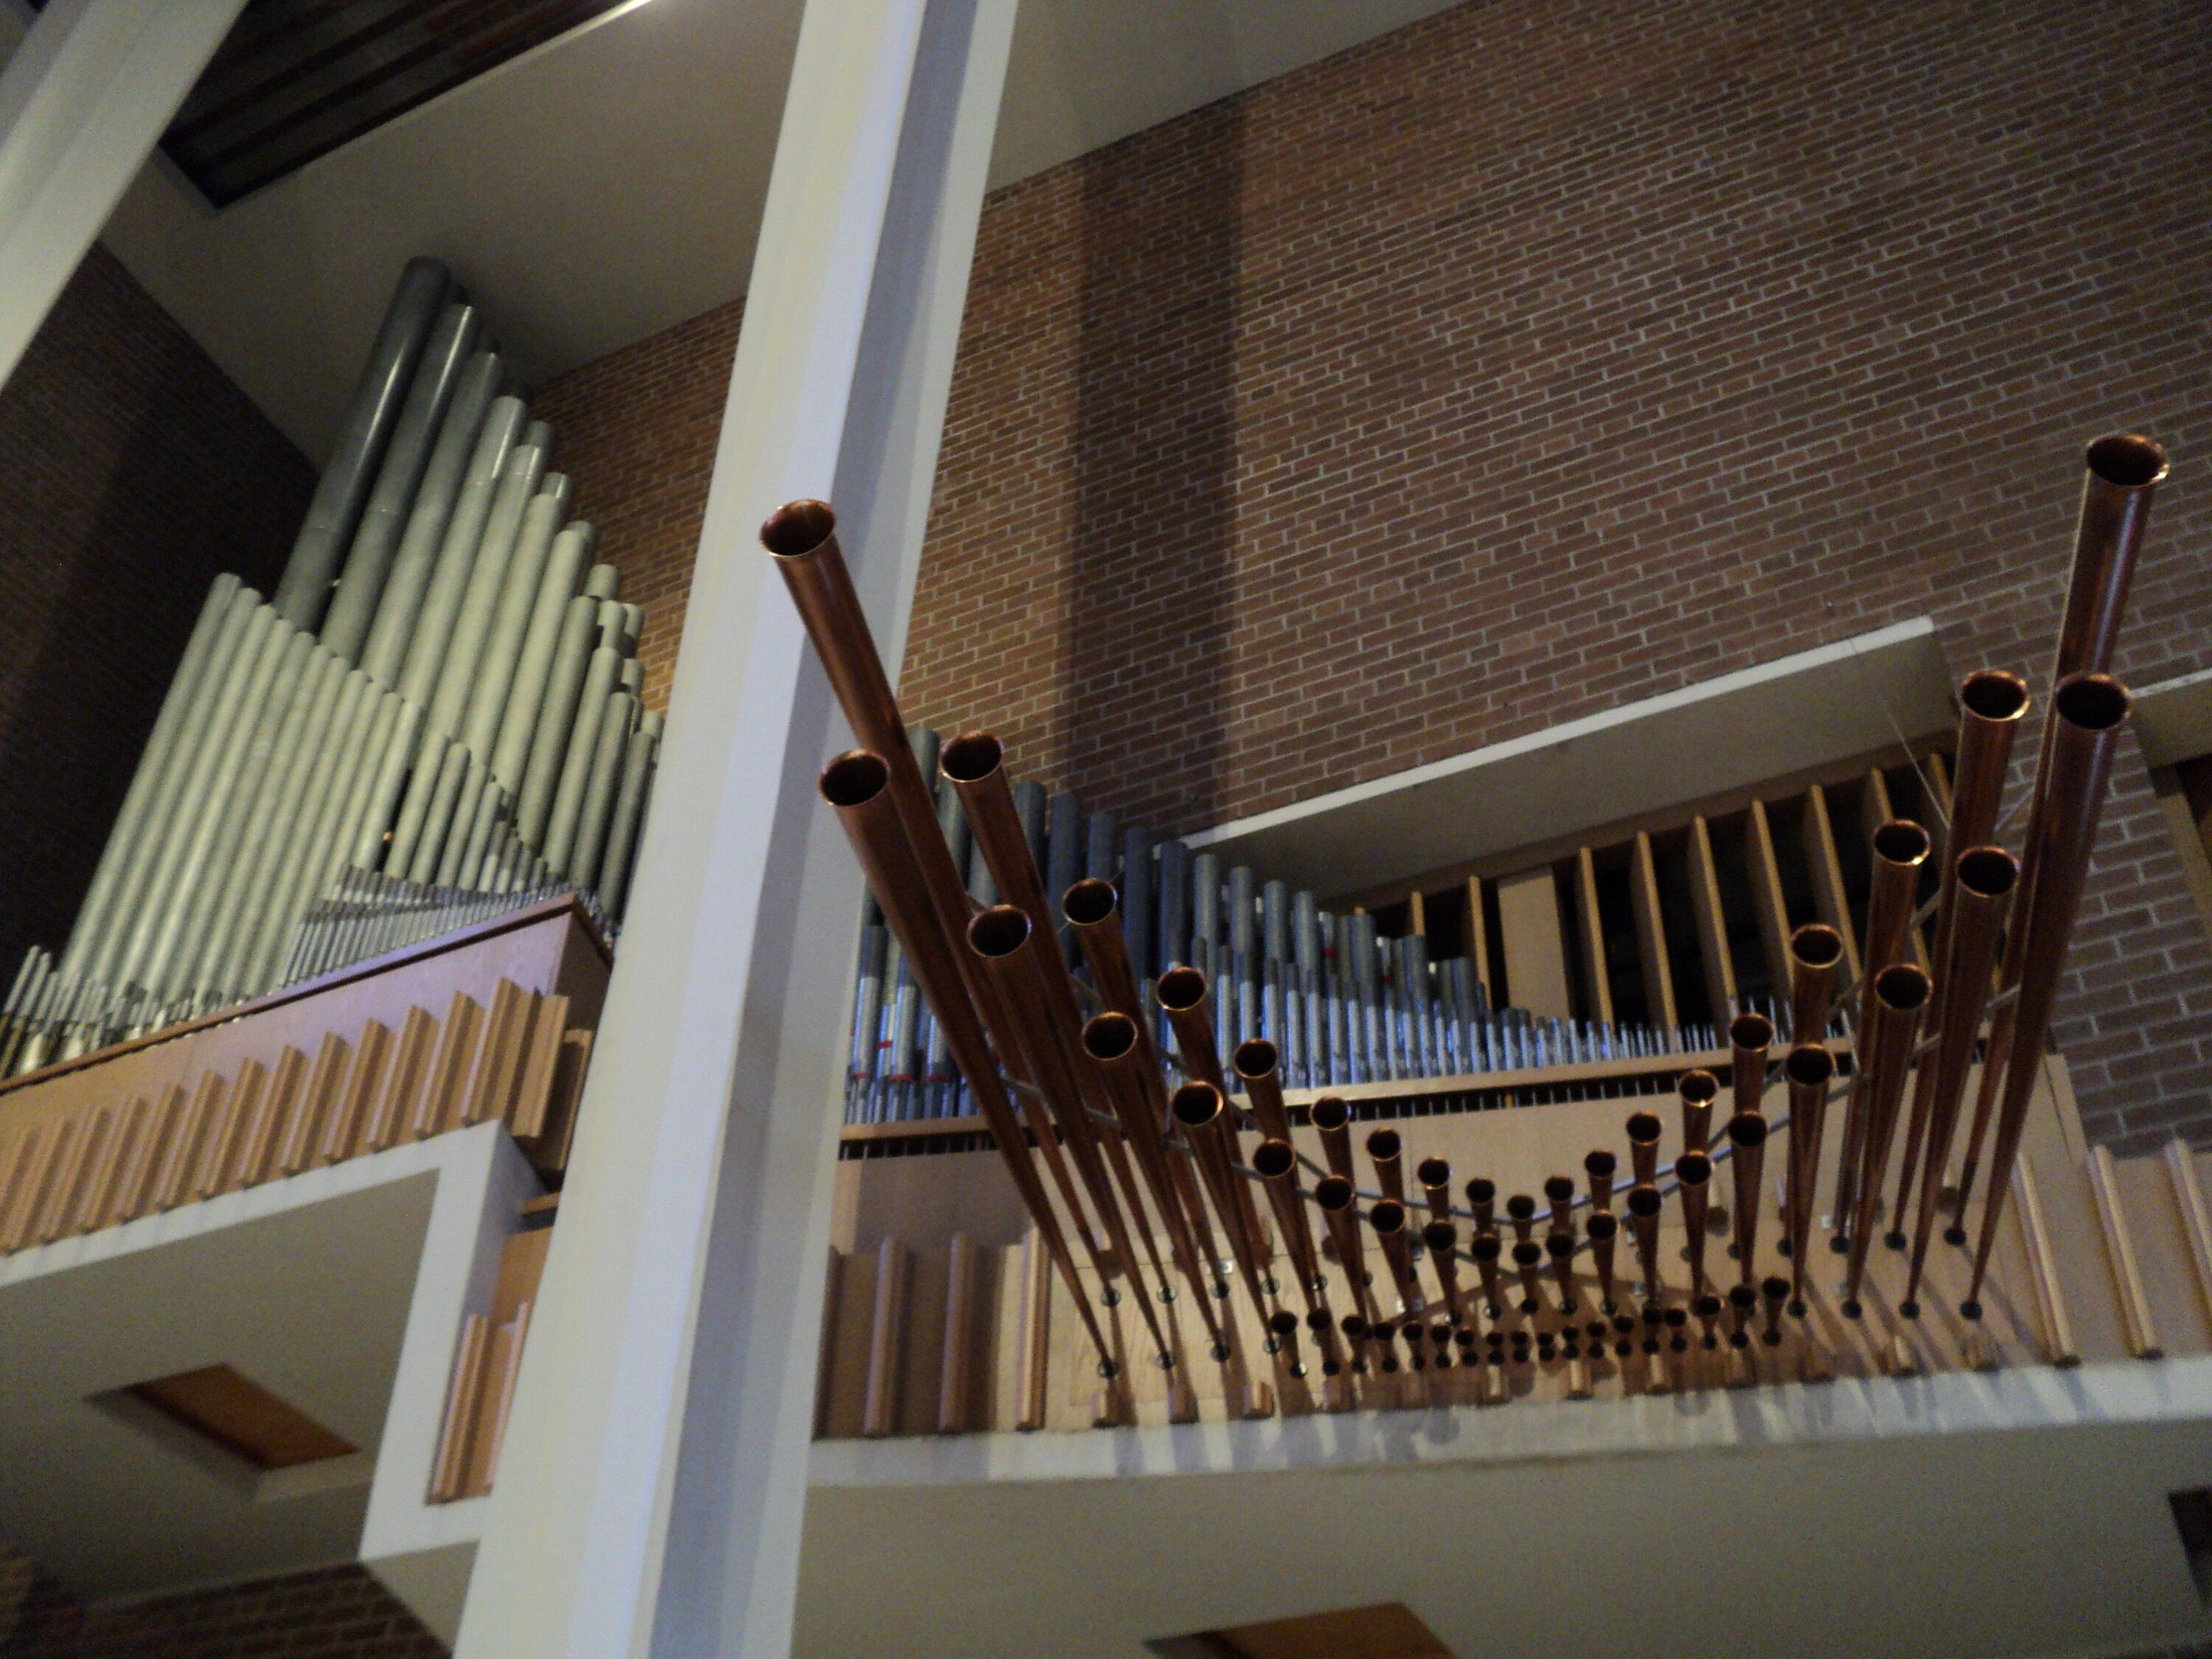 St. Peter's pipe organ